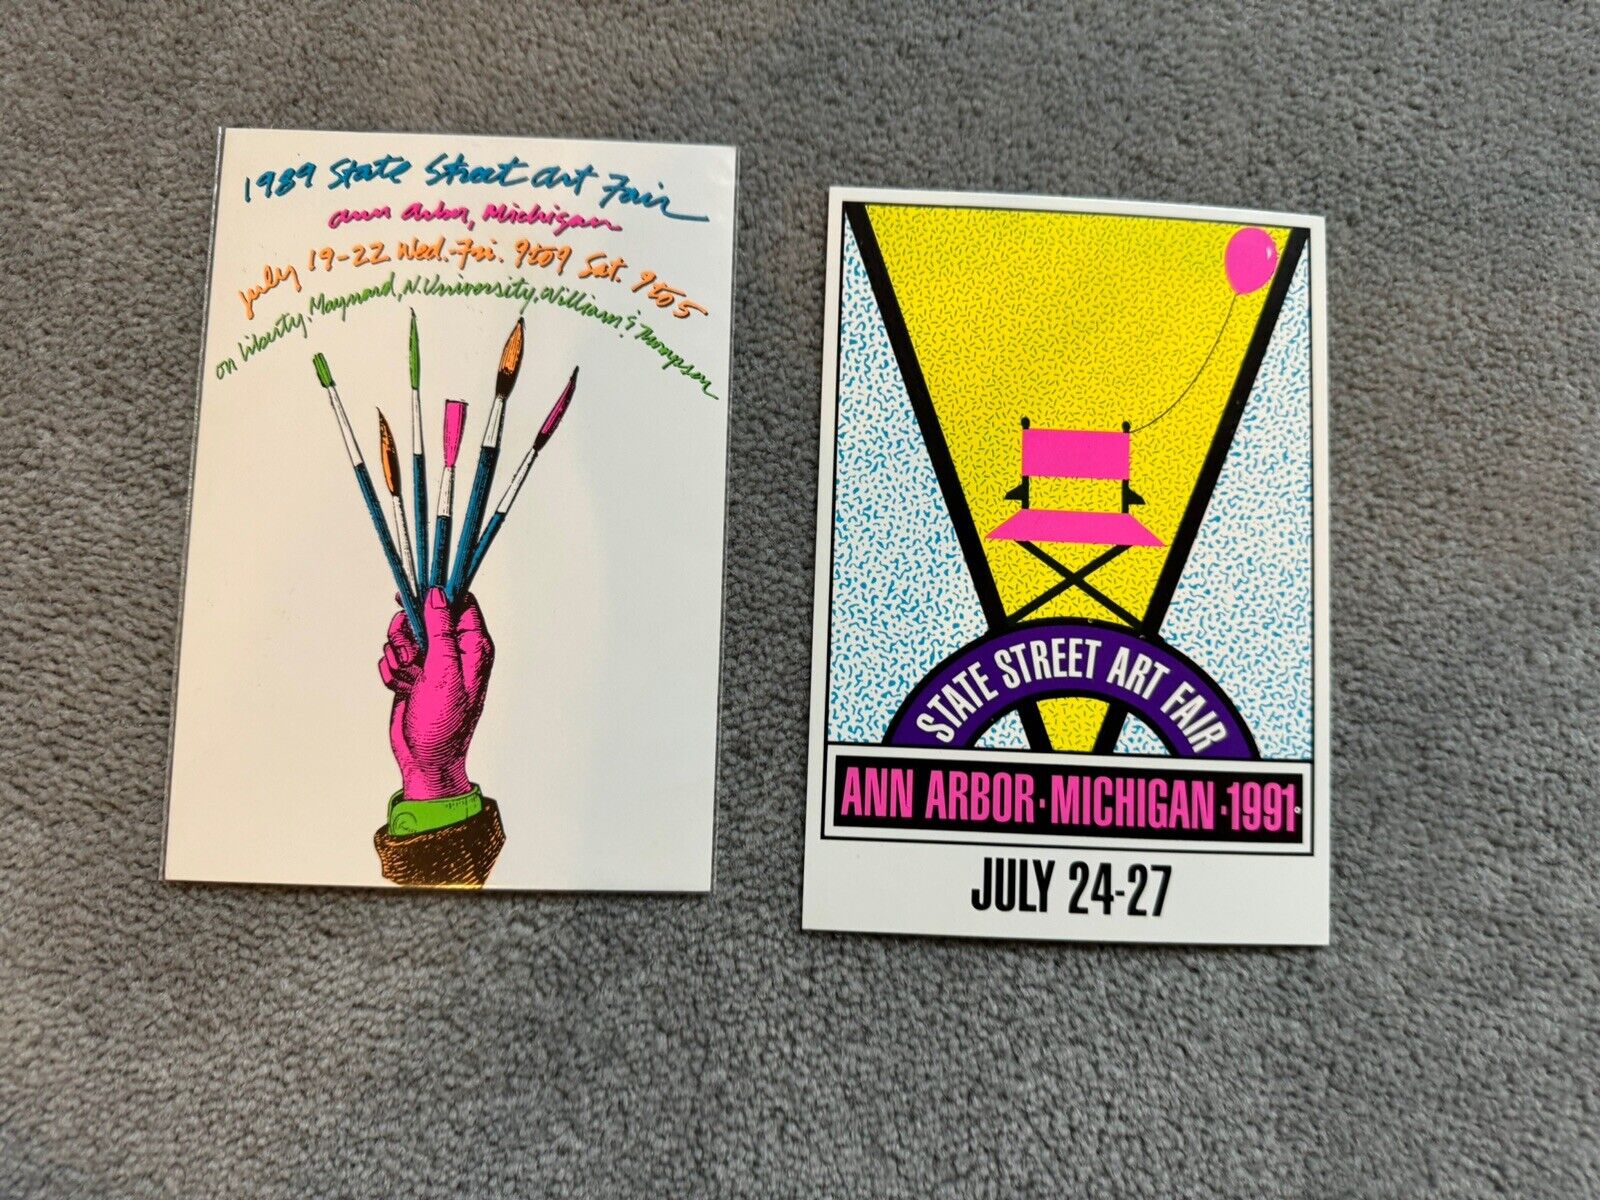 1989 1991 State Street art Fair Ann Arbor Michigan postcards